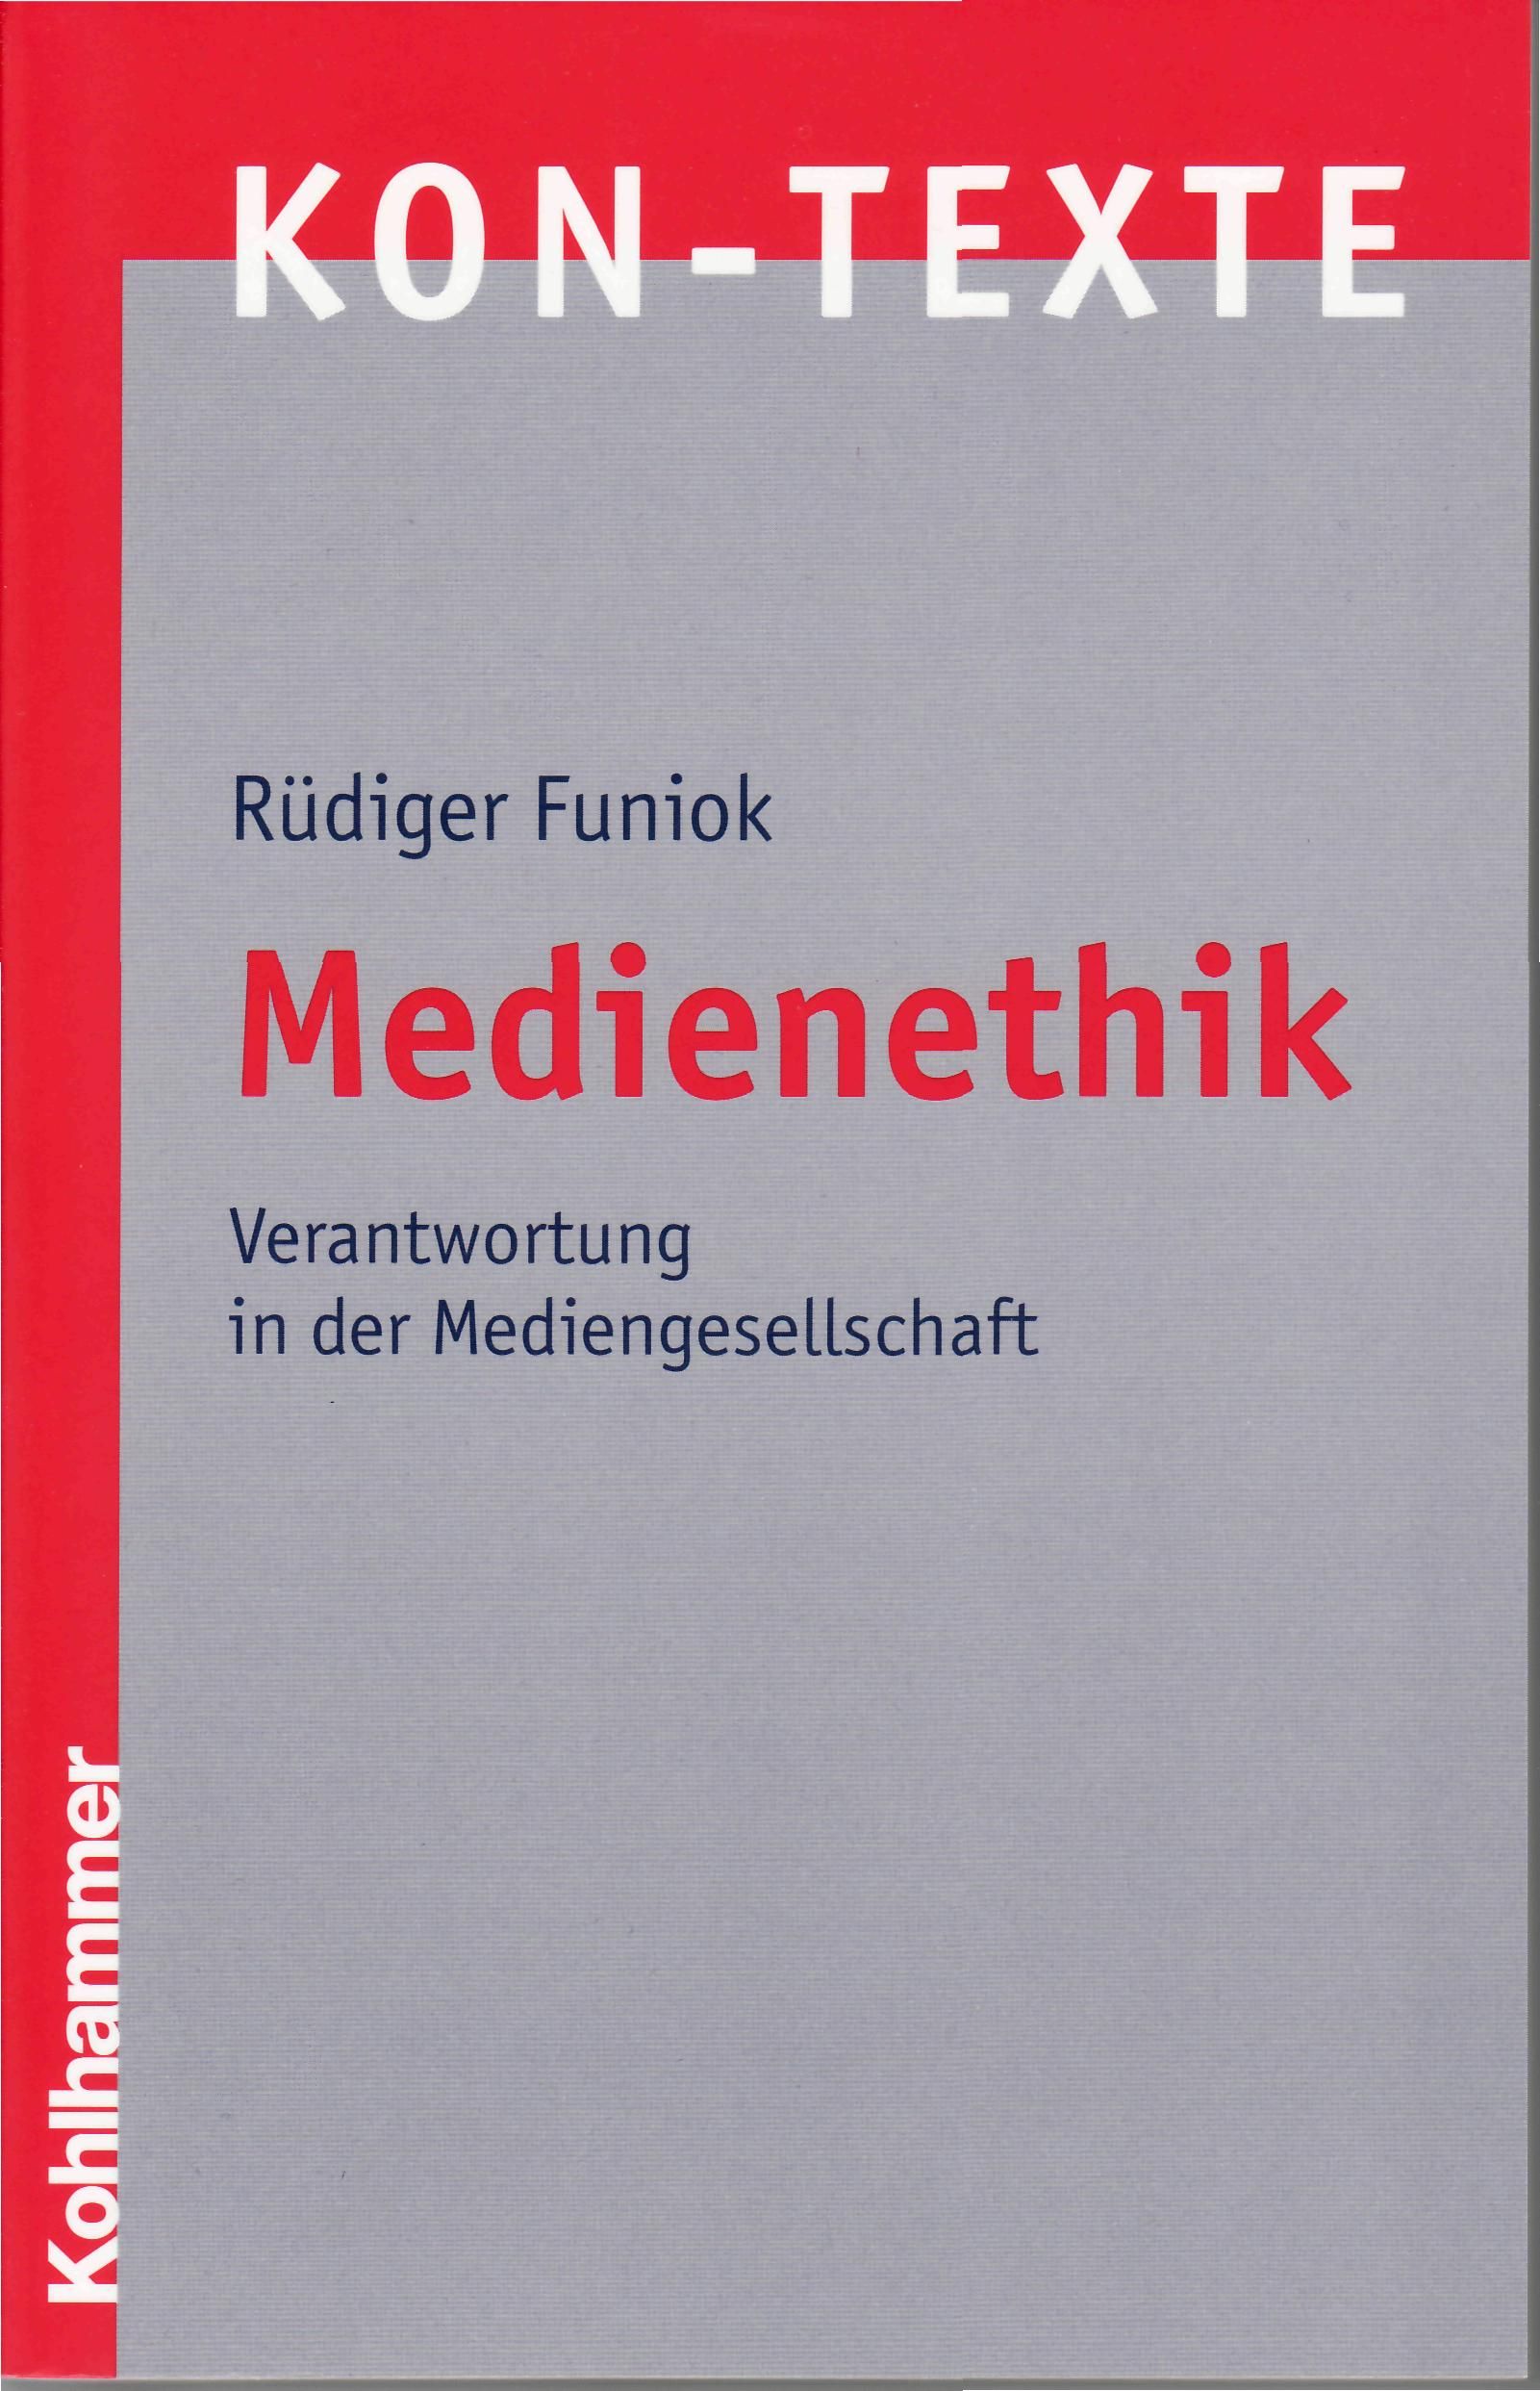 Cover Medienethik Funiok